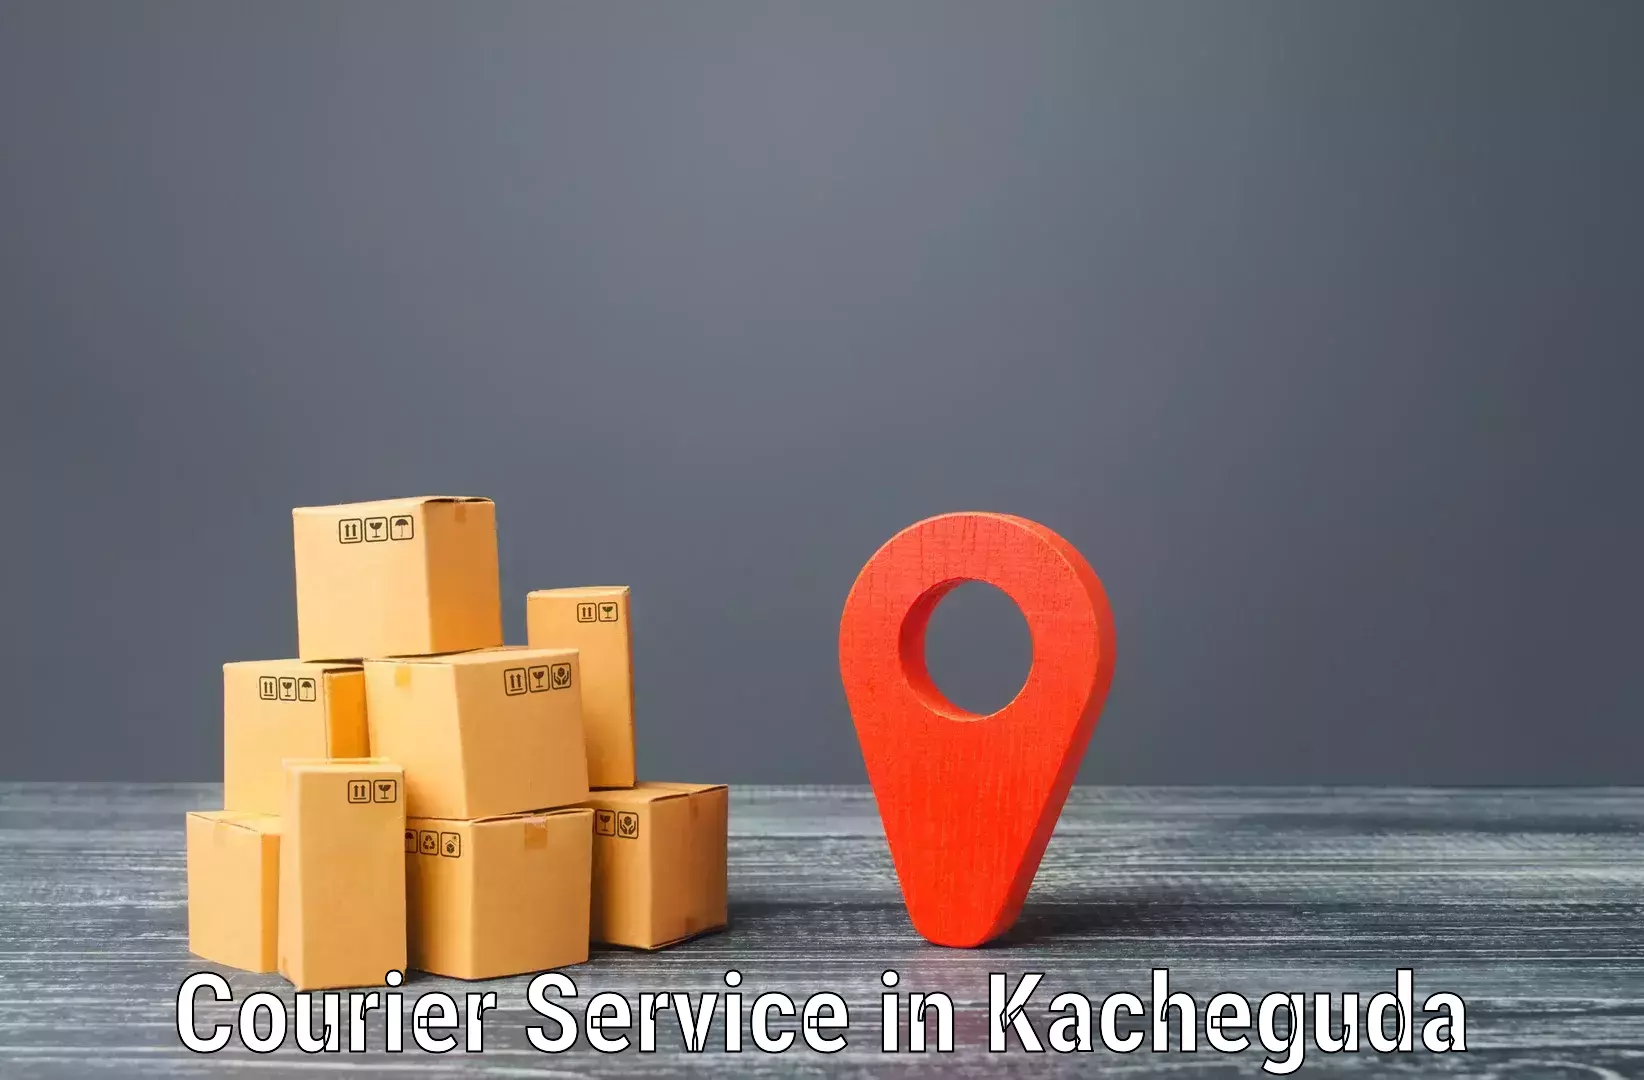 Courier service efficiency in Kacheguda